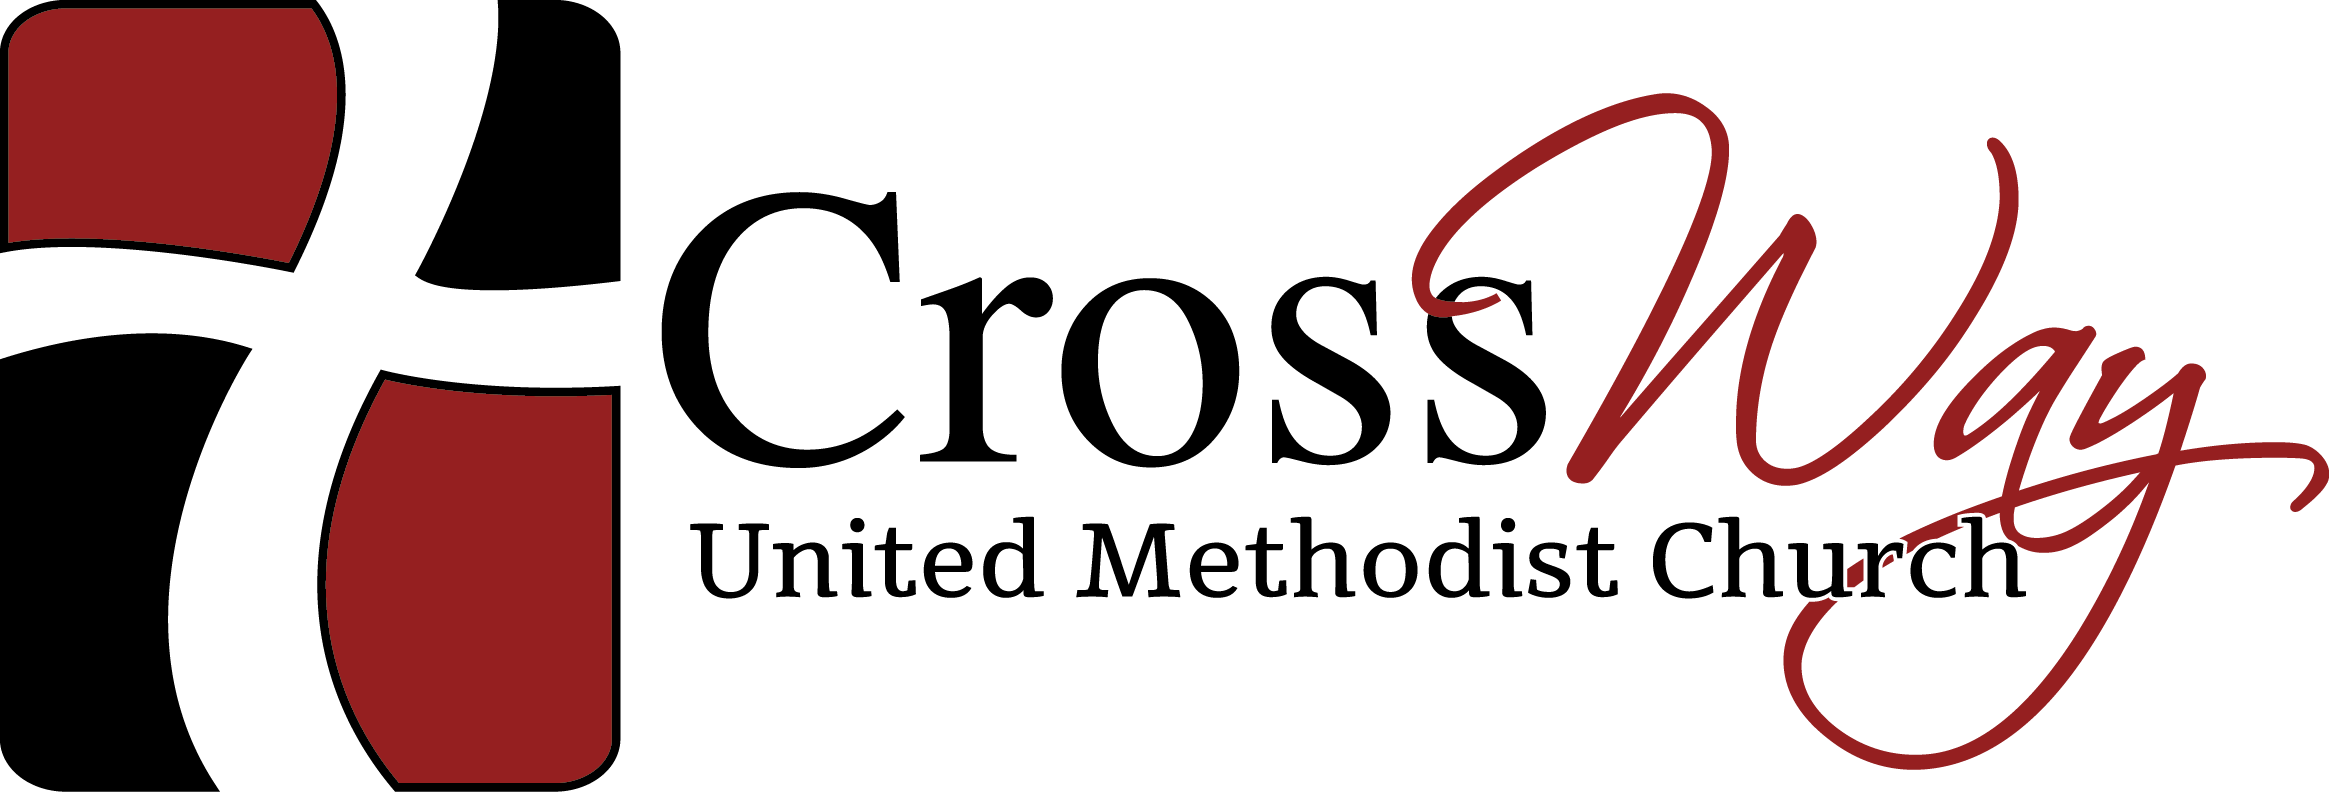 Crossway Logo - Cross Way UMC - United Methodist Church, 380 Corridor